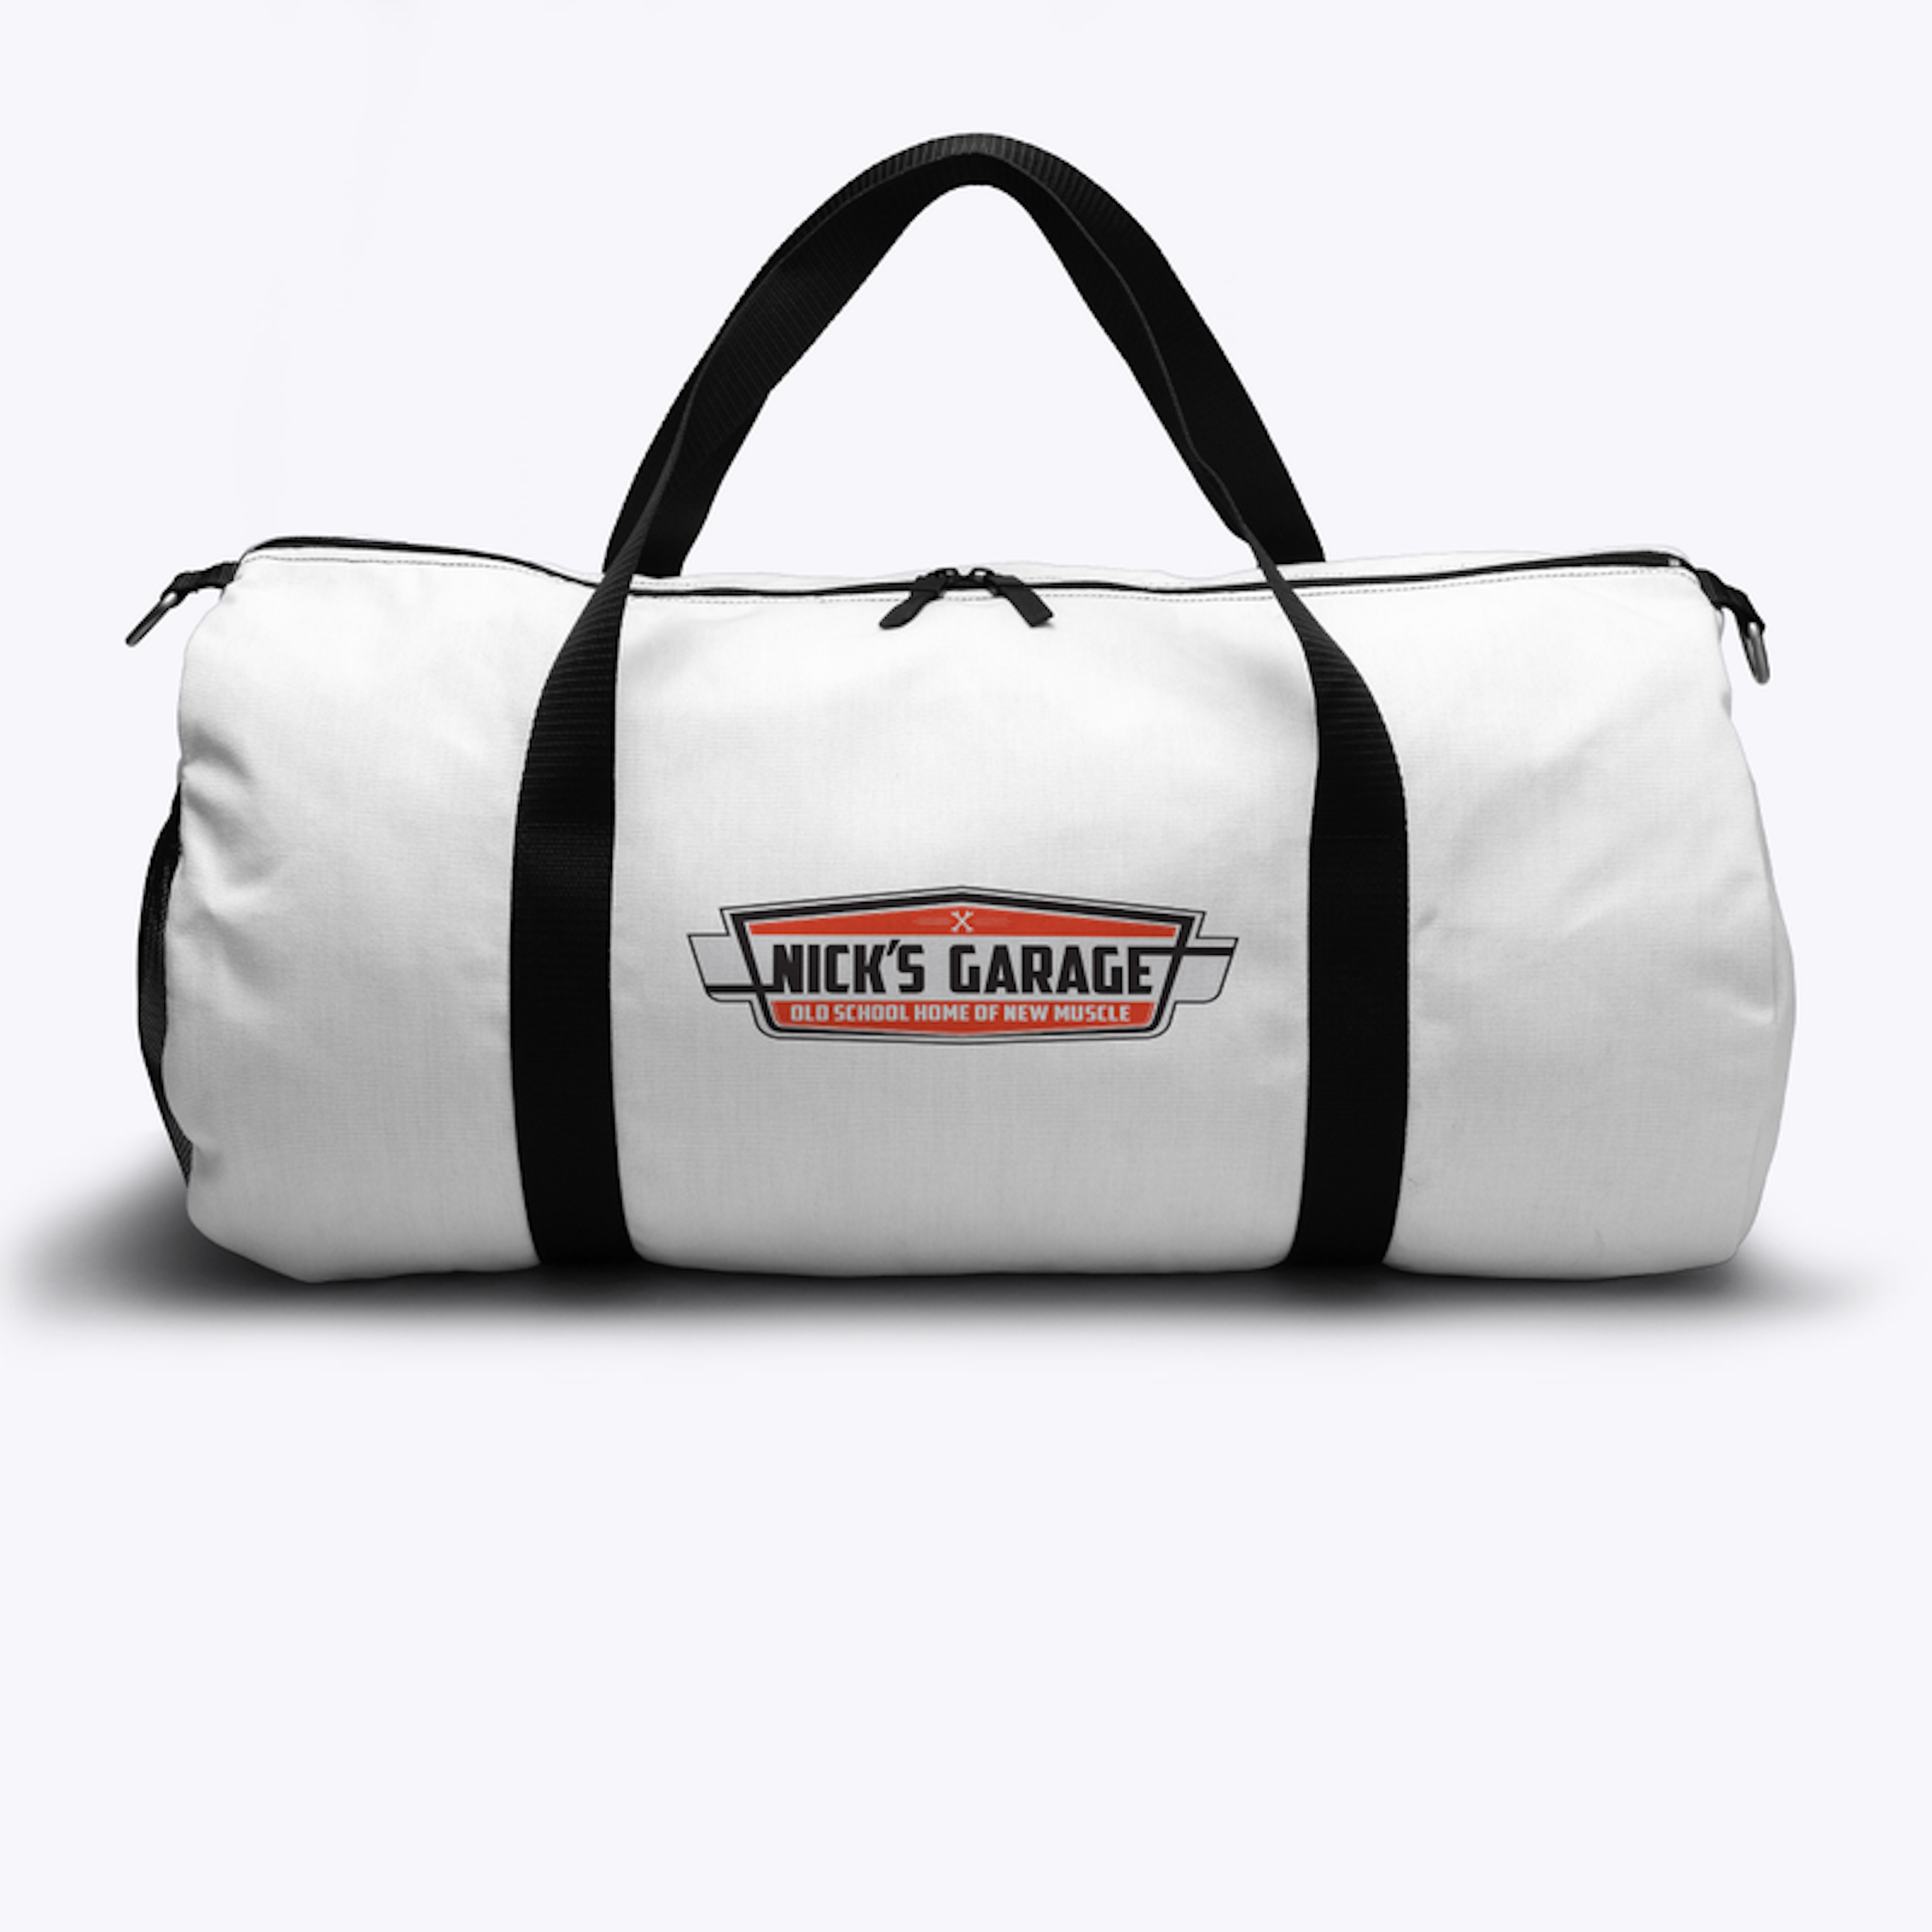 Nick's Garage White Duffle Bag